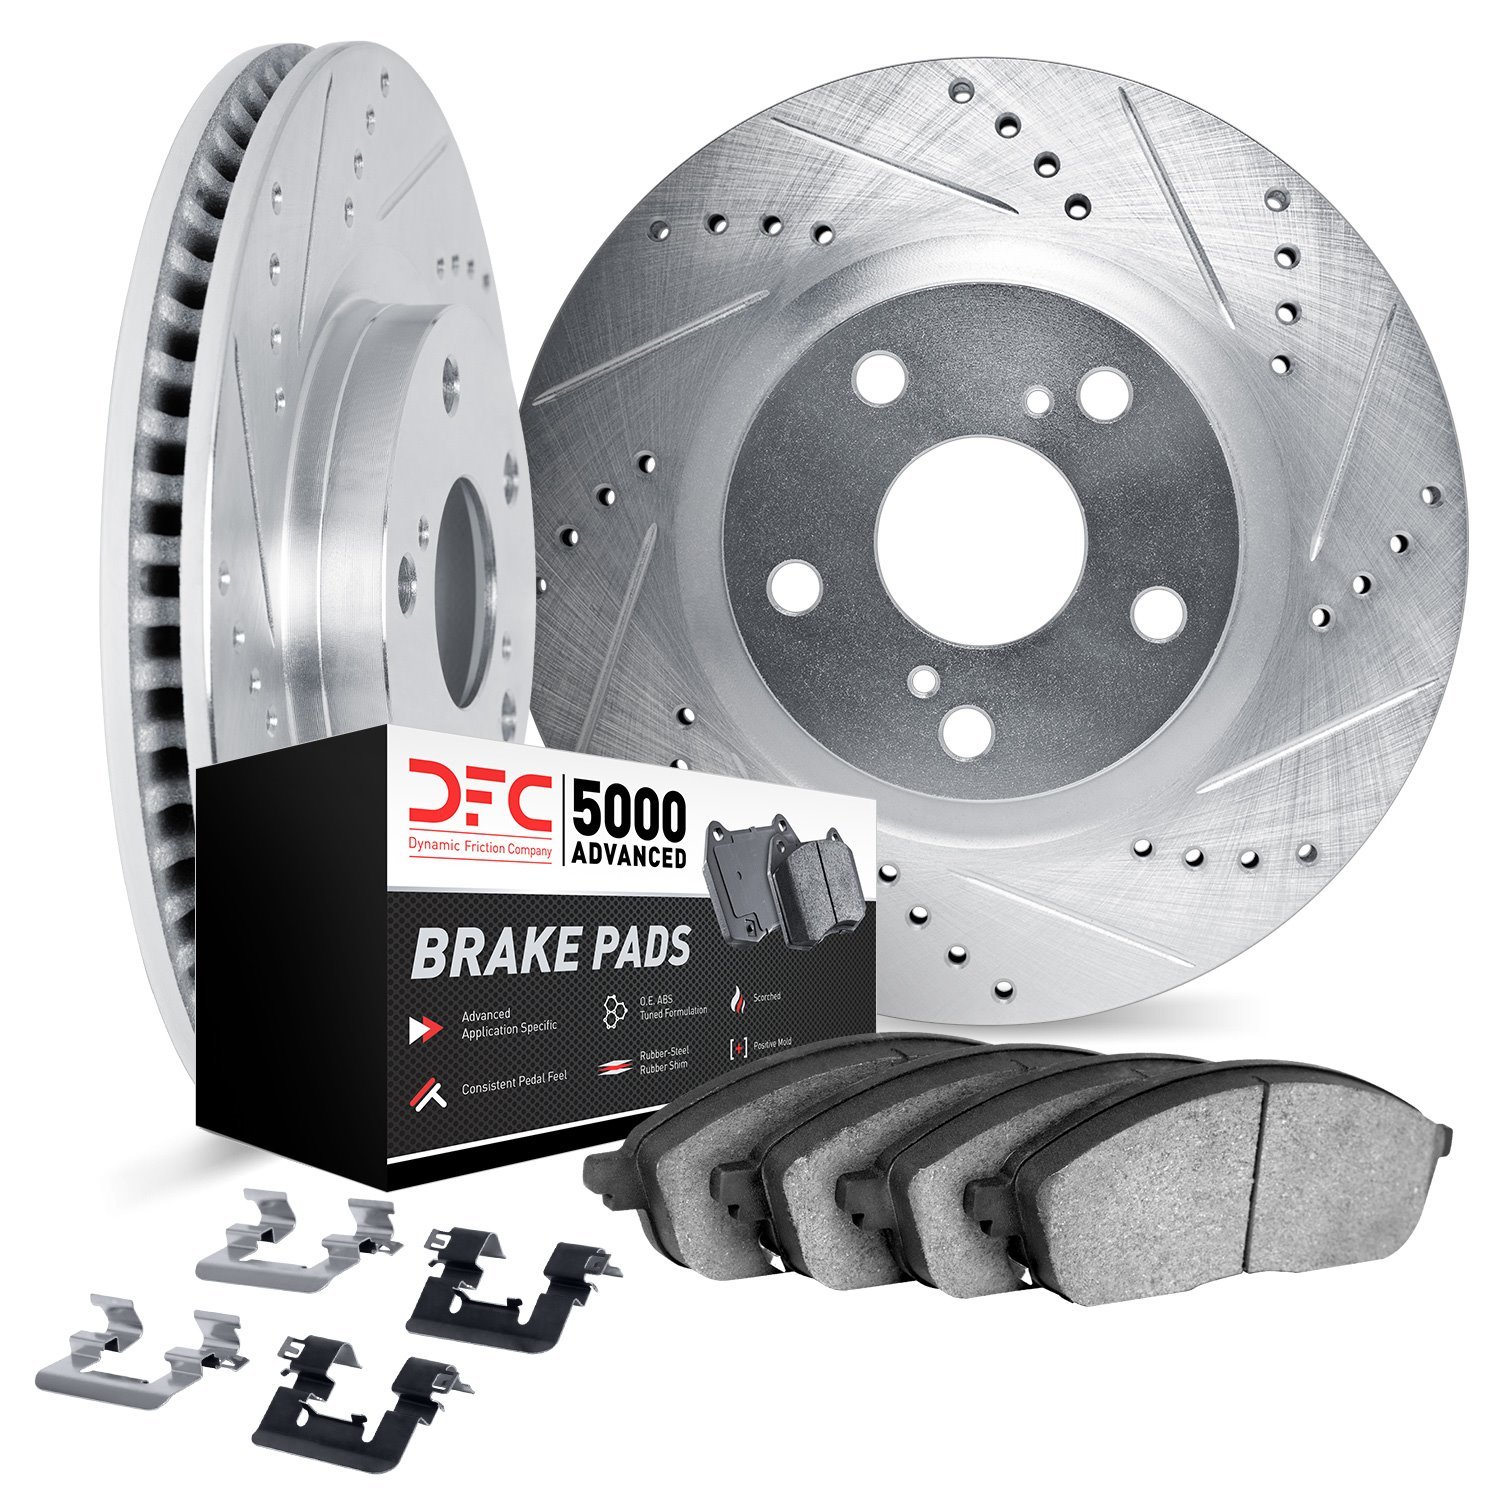 7512-31743 Drilled/Slotted Brake Rotors w/5000 Advanced Brake Pads Kit & Hardware [Silver], Fits Select Multiple Makes/Models, P